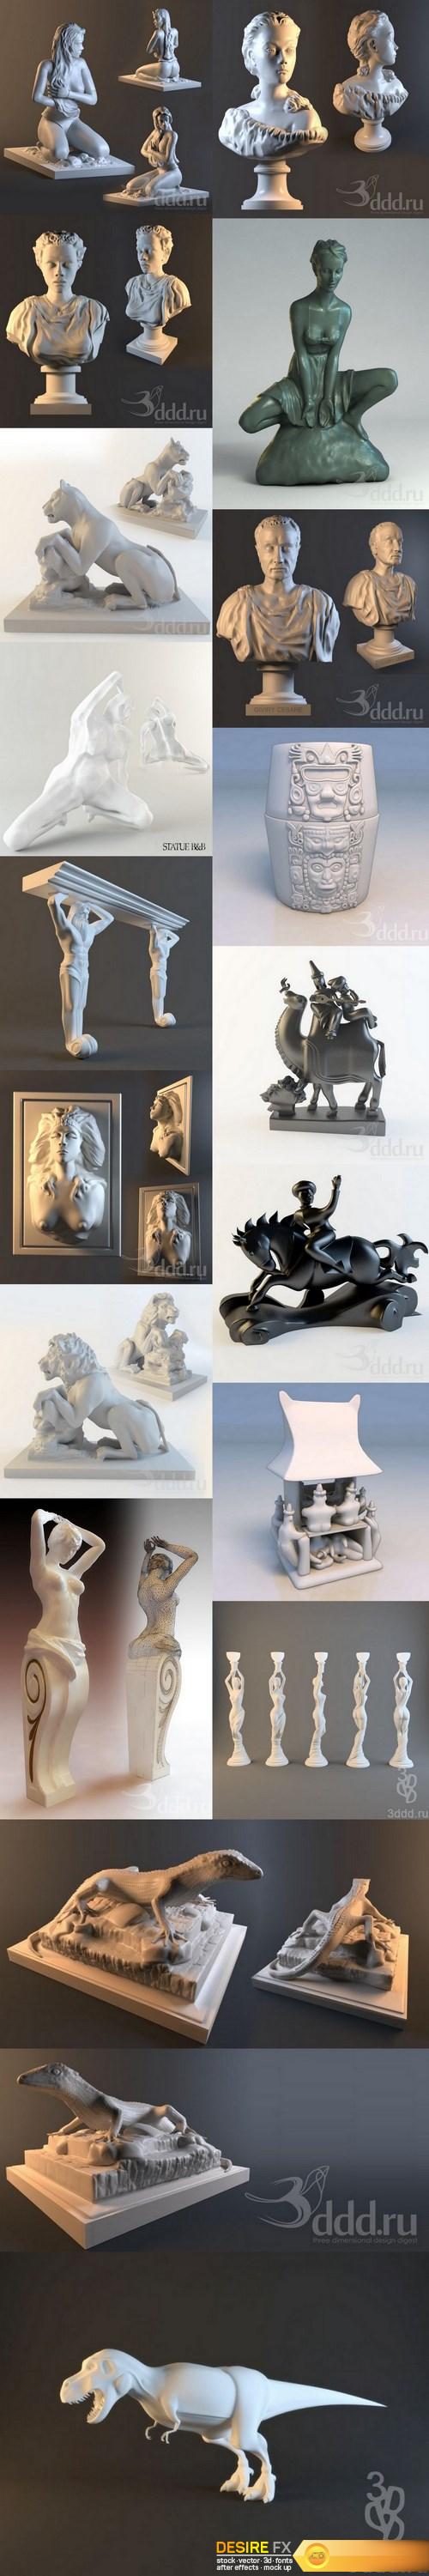 3DDD - Pro Models of Sculptures